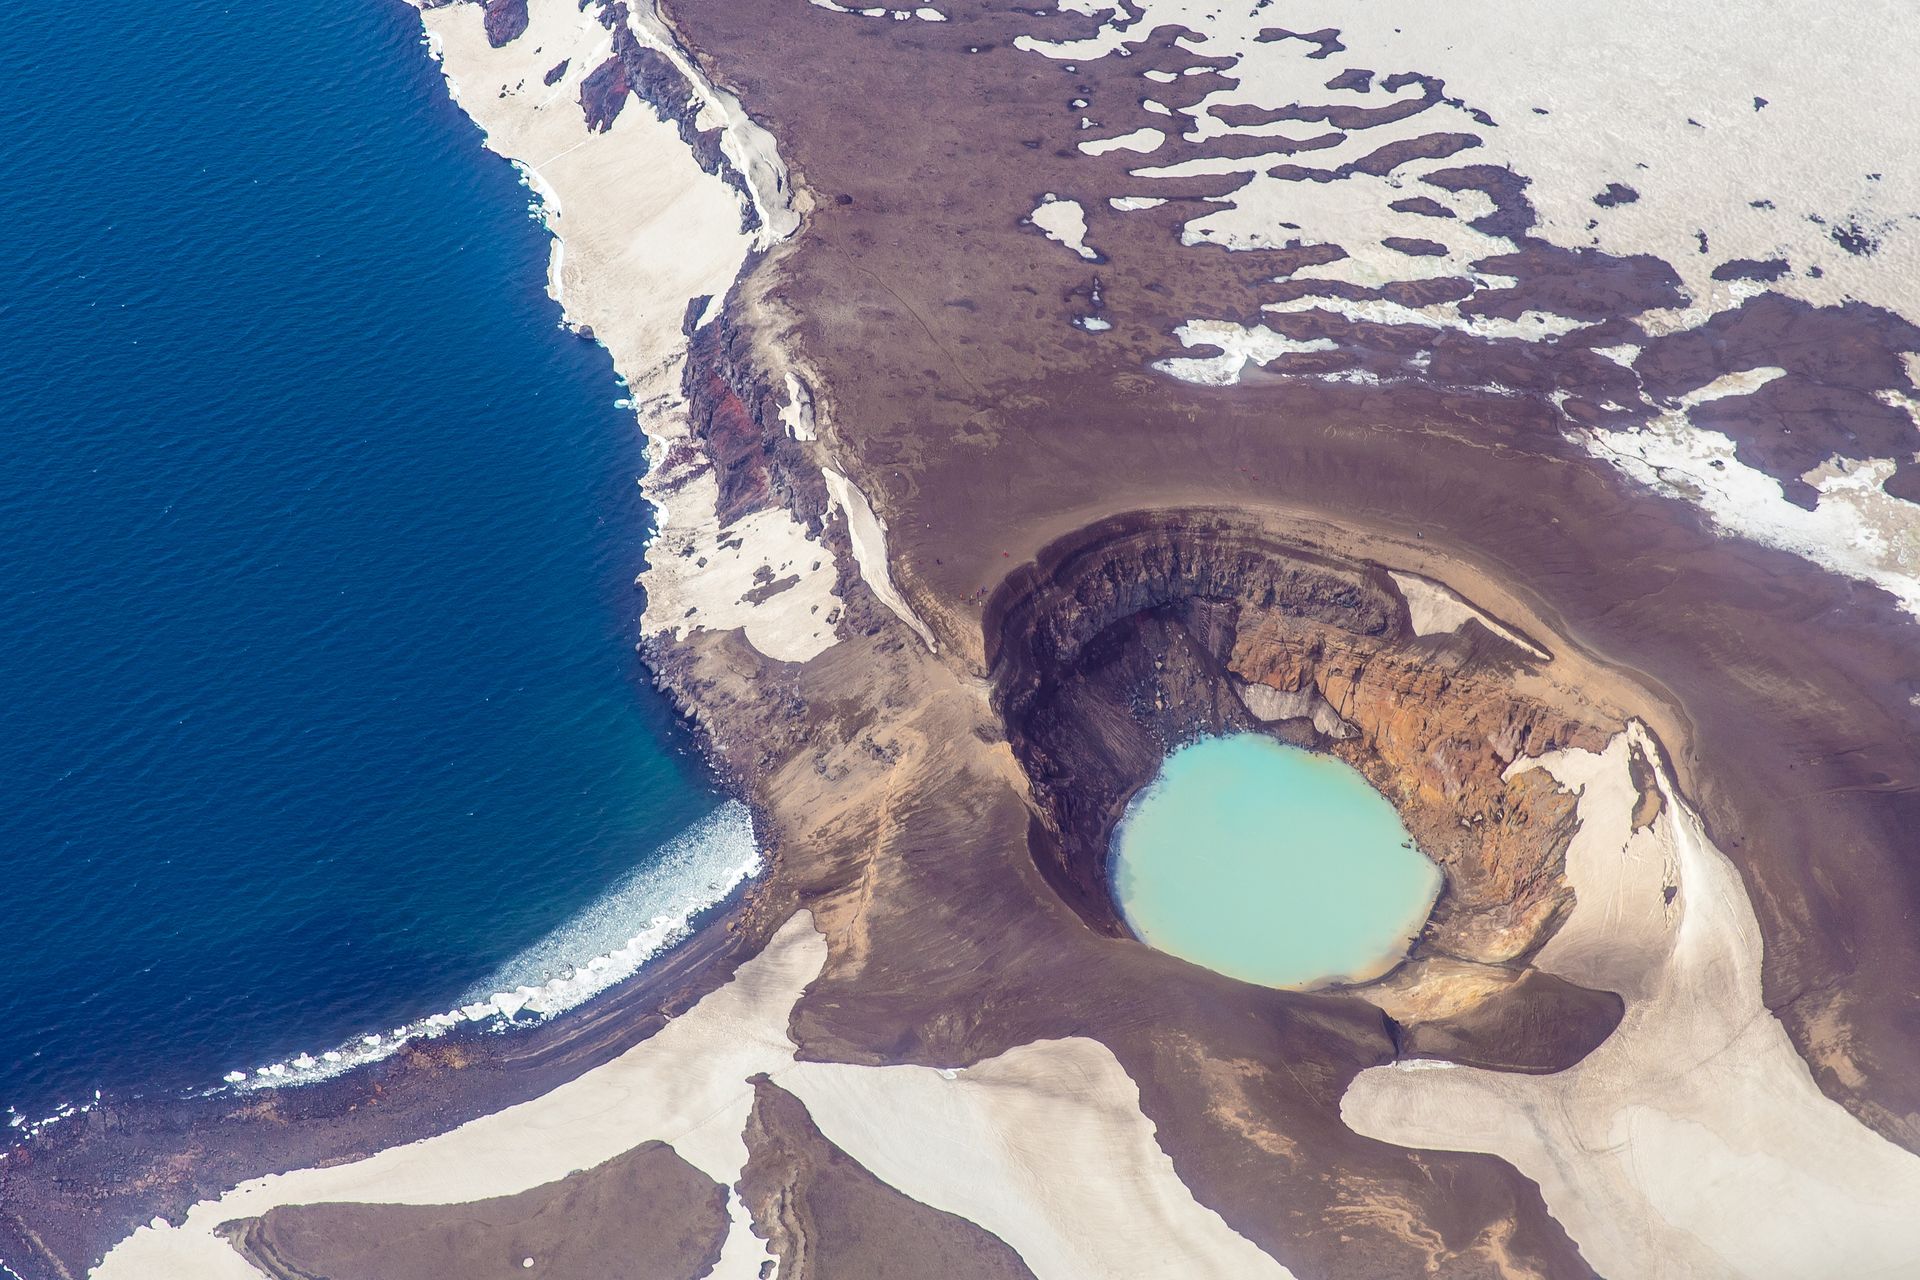 Víti - Crater at Öskjuvatn, Askja area, Iceland